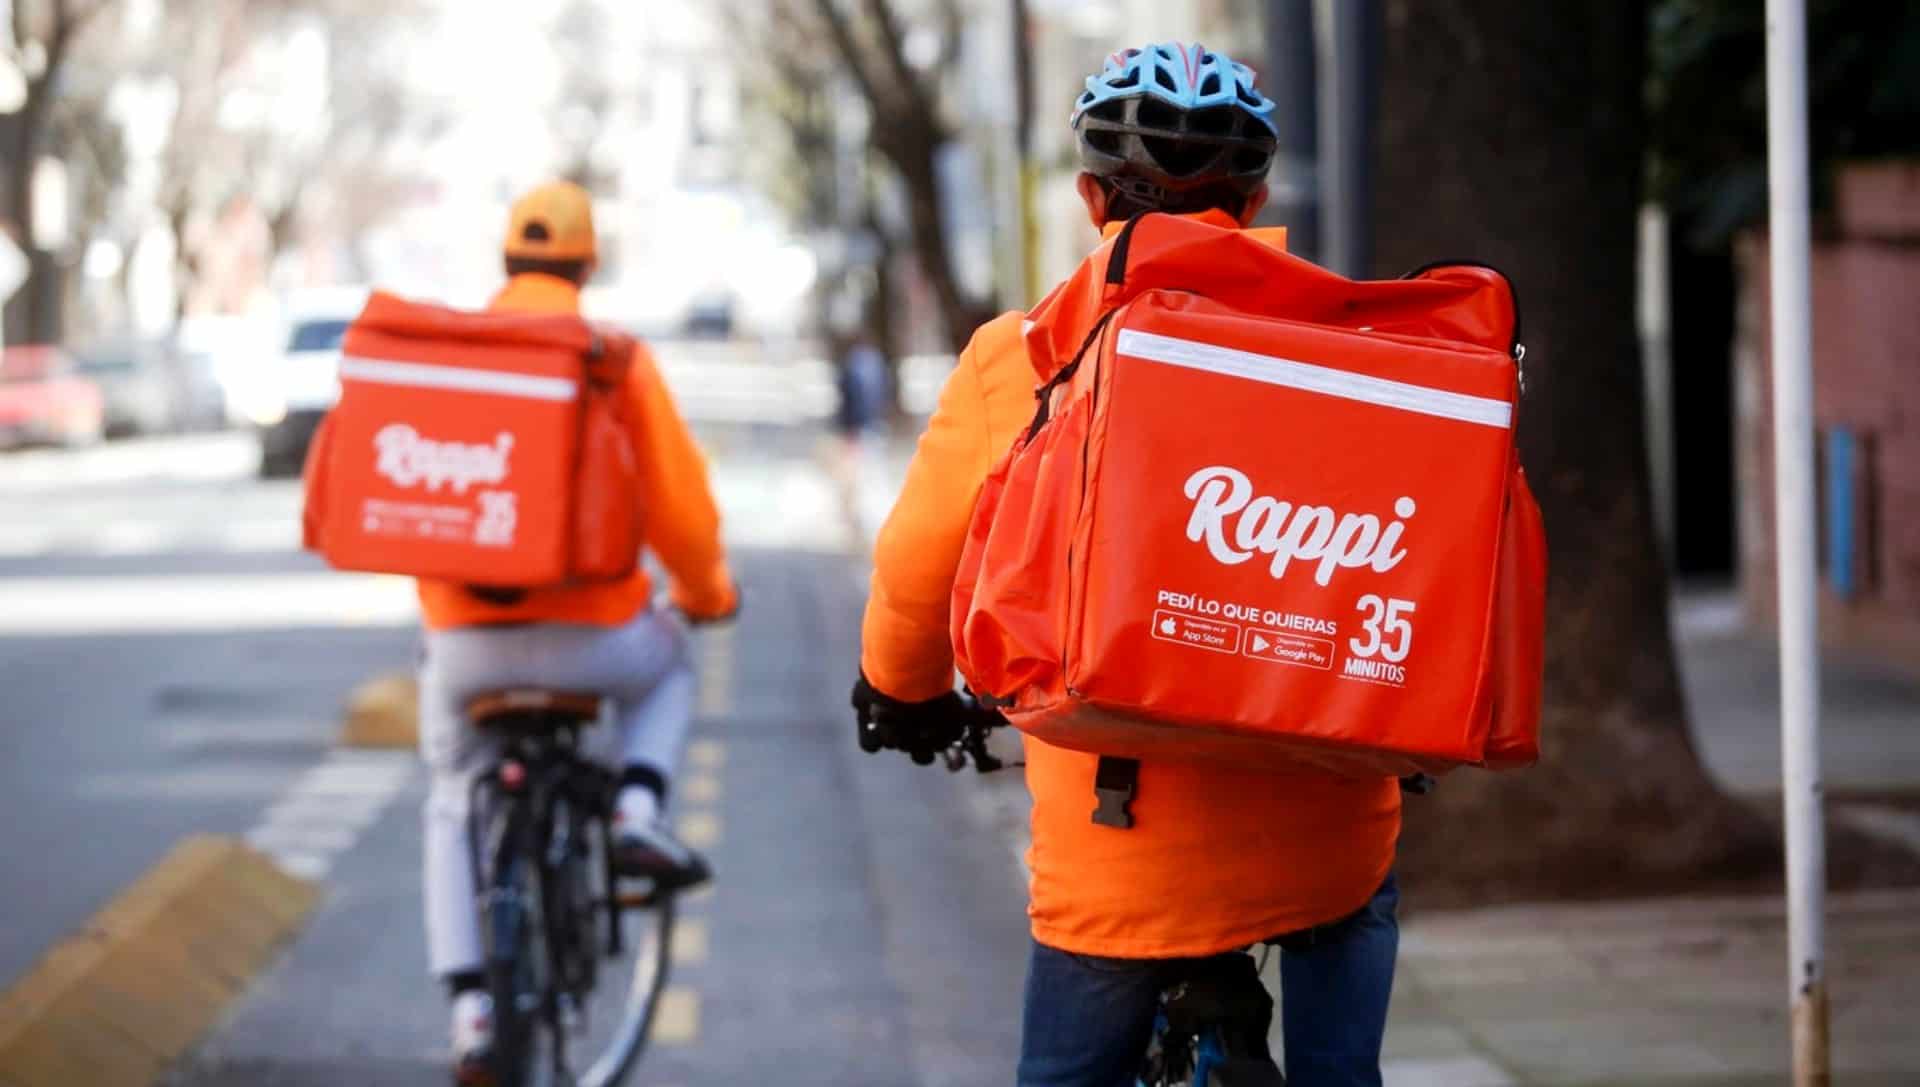 entregadores na bicicleta usando uniforme do aplicativo de delivery Rappi